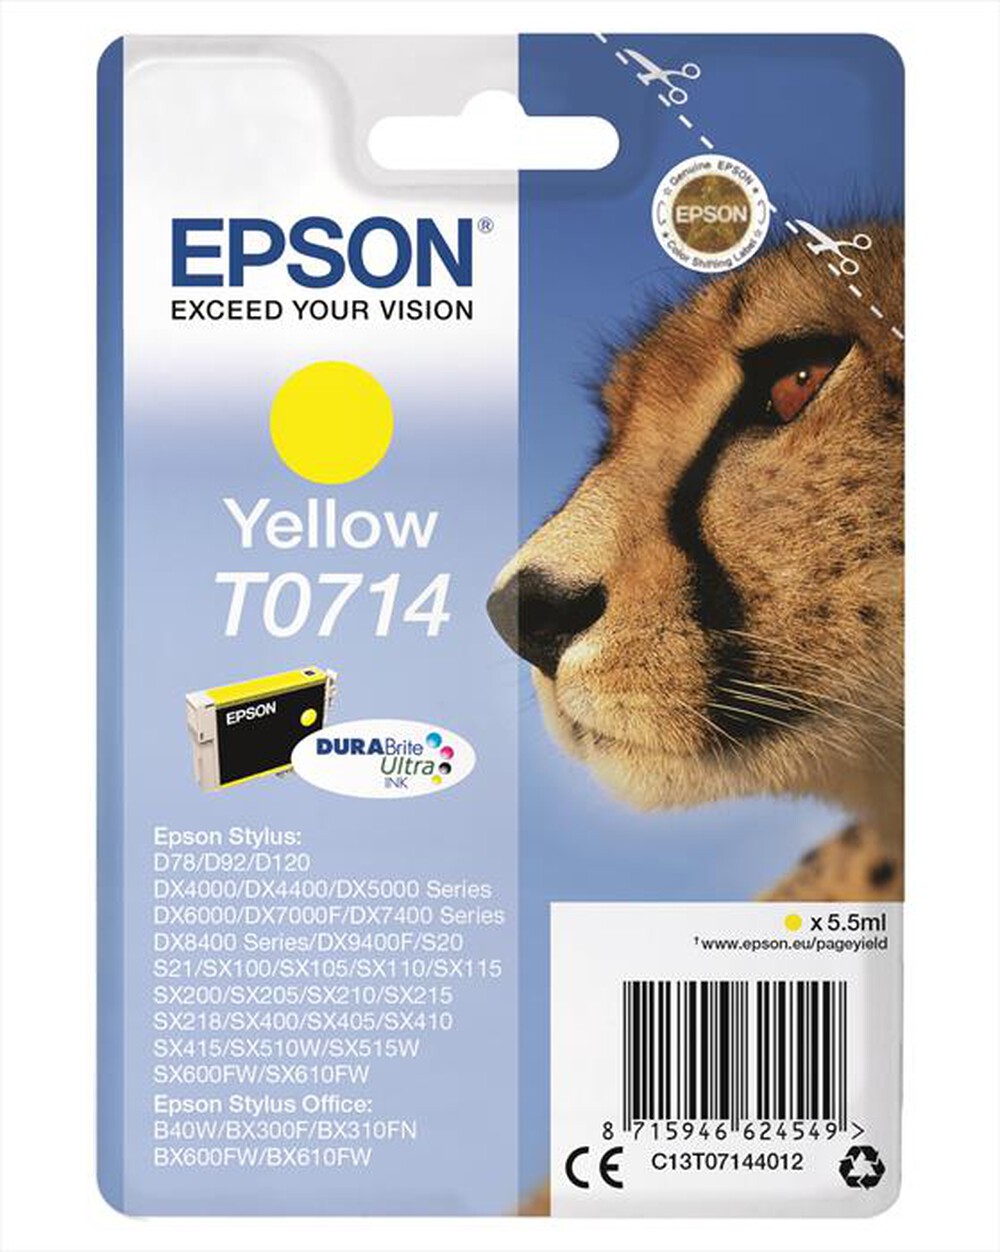 "EPSON - Cartuccia inchiostro giallo C13T07144021 - Giallo"